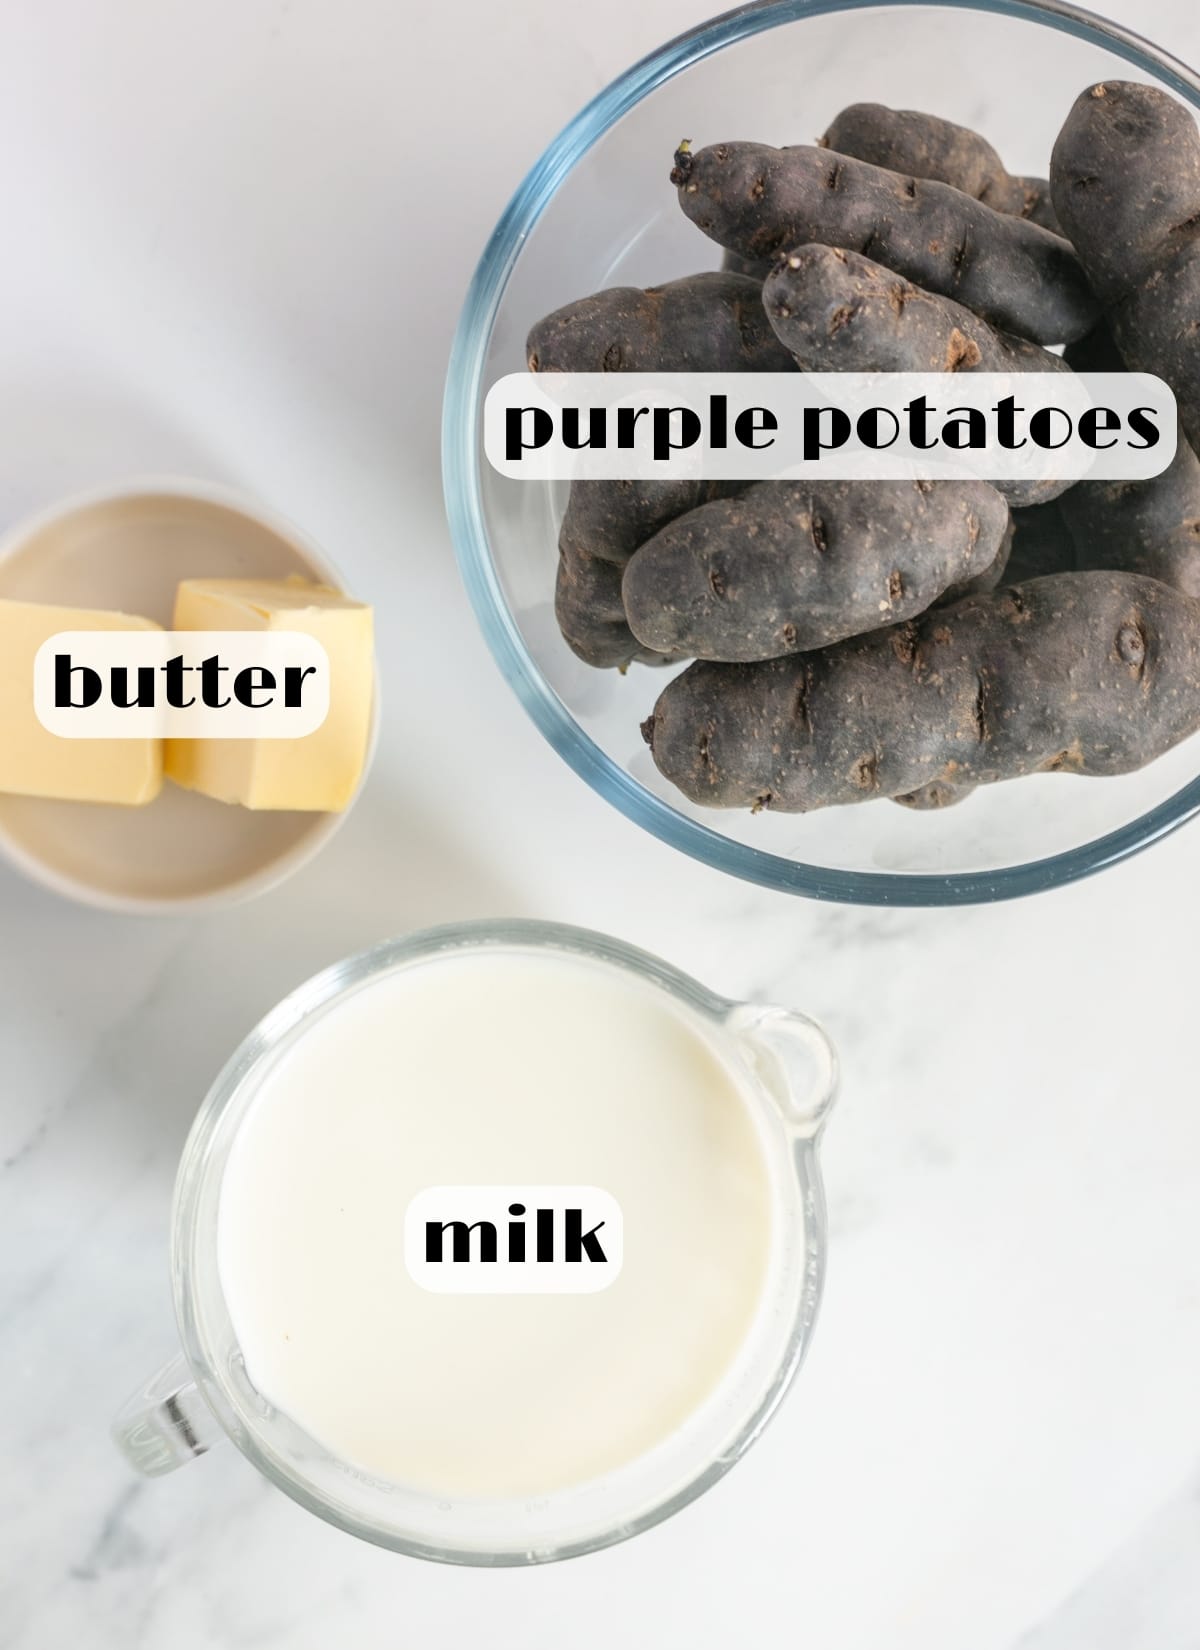 purple mashed potatoes ingredients: purple potatoes, milk, butter.